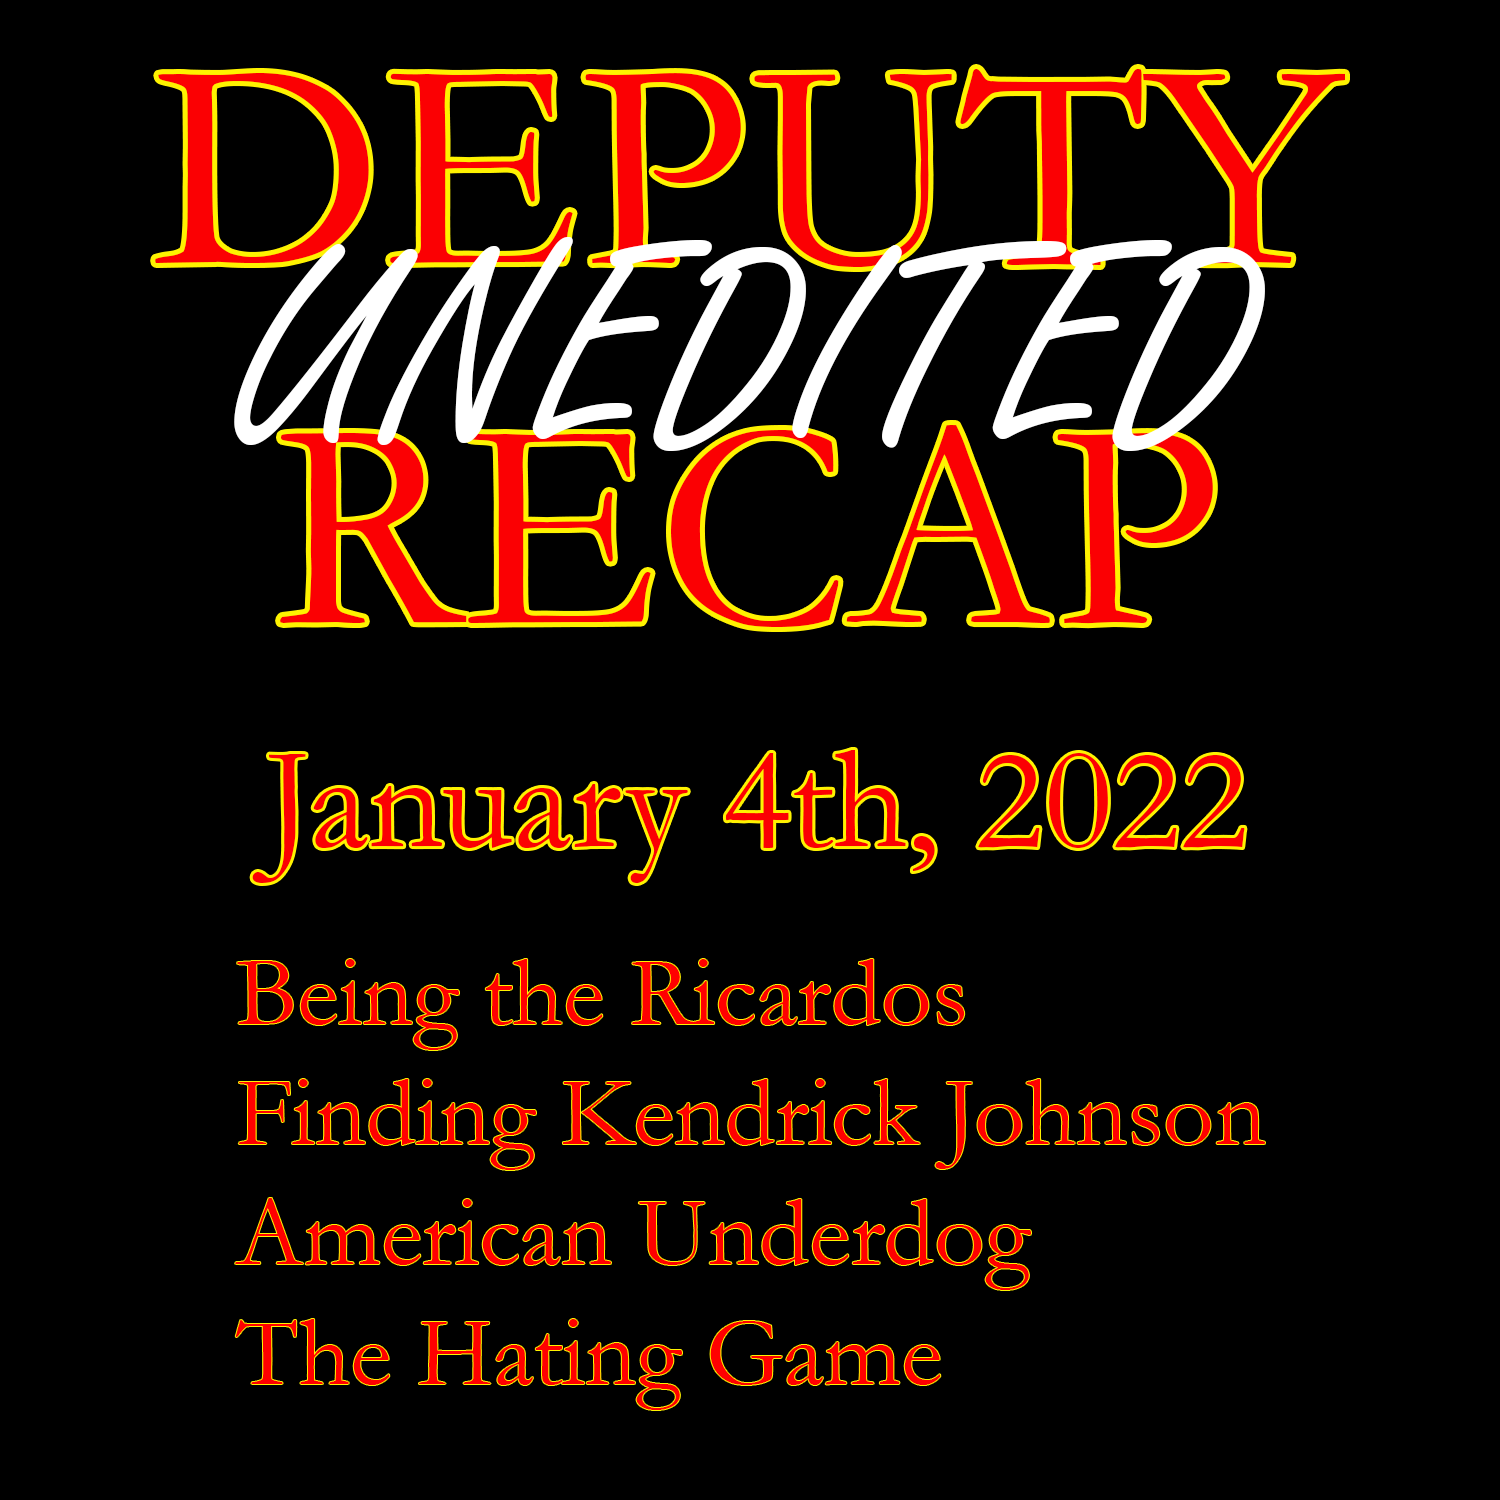 Movie Recap (UNEDITED) - January 4th, 2022